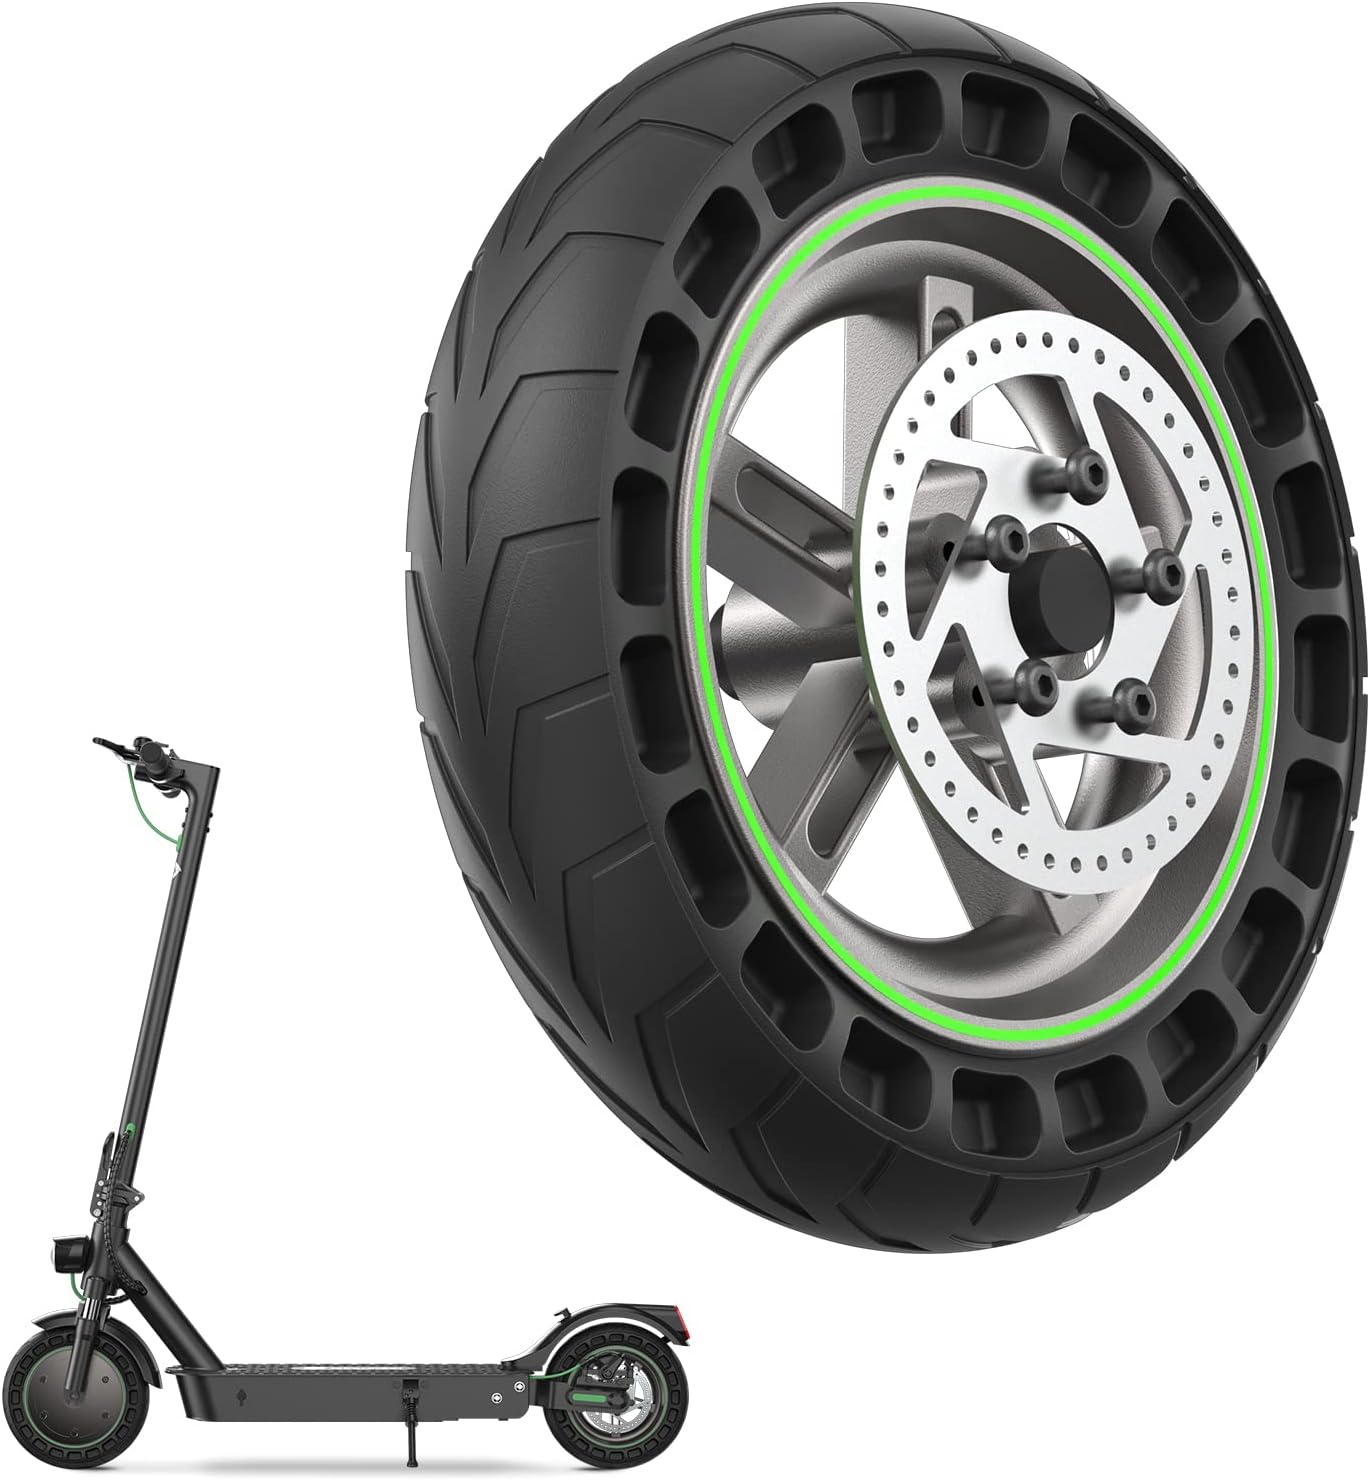 Escooter Motor rear wheels